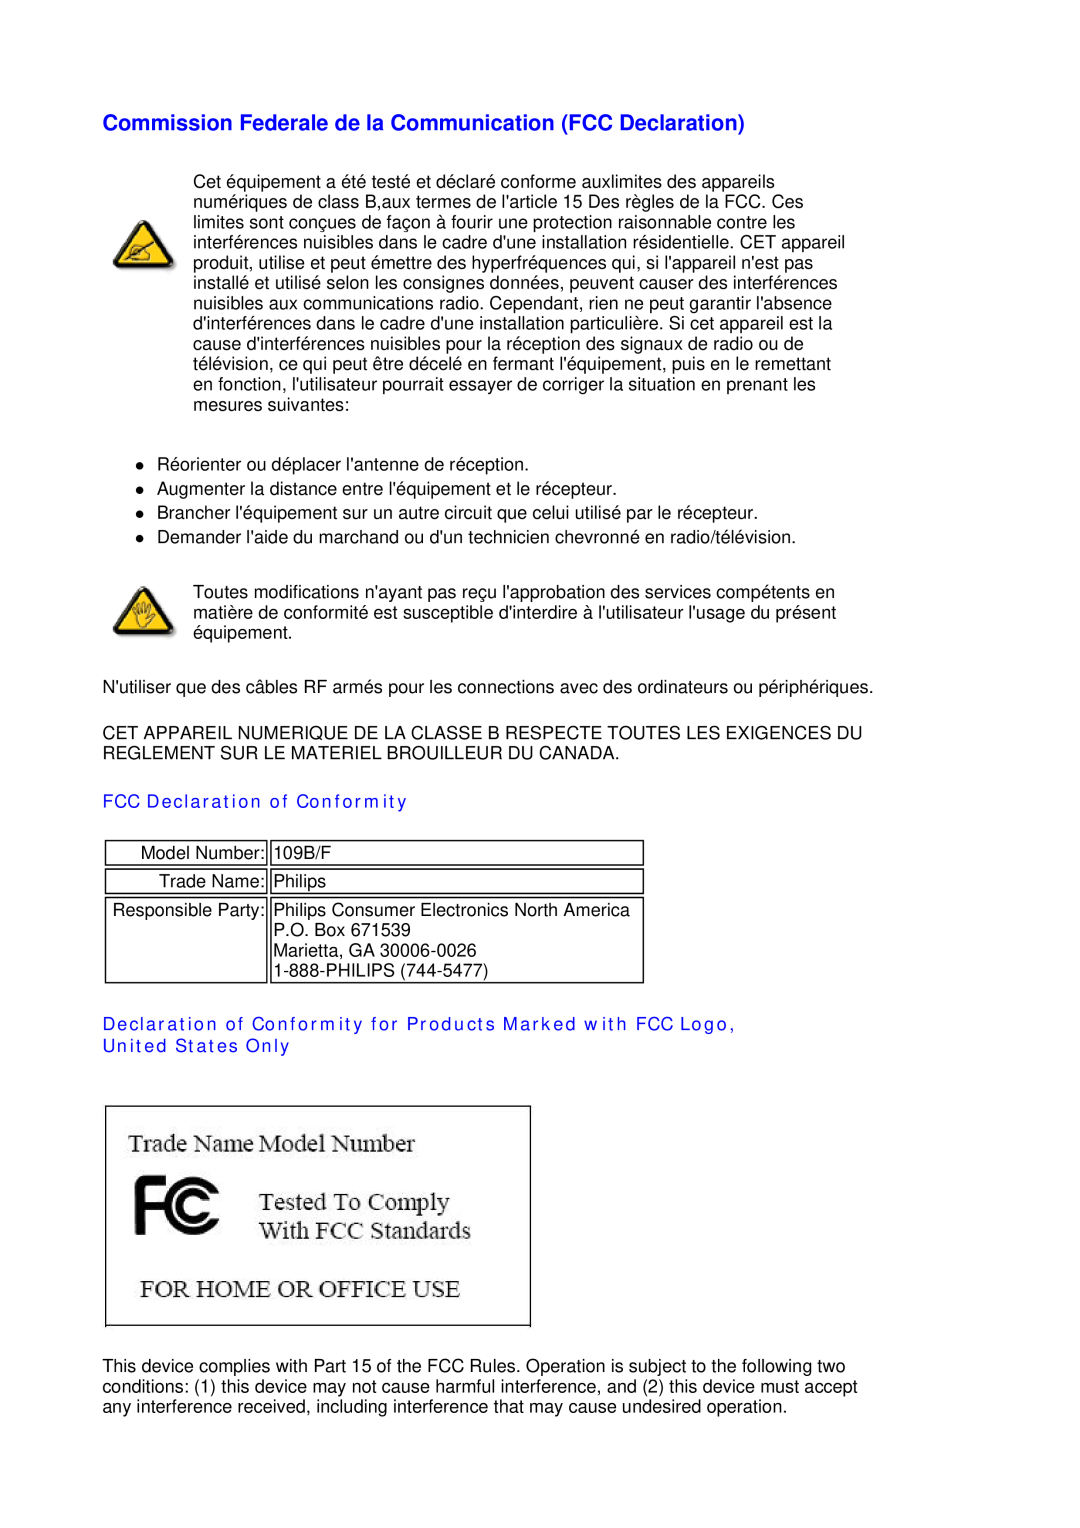 Philips 109F7, 109B7 manual Commission Federale de la Communication FCC Declaration, FCC Declaration of Conformity 